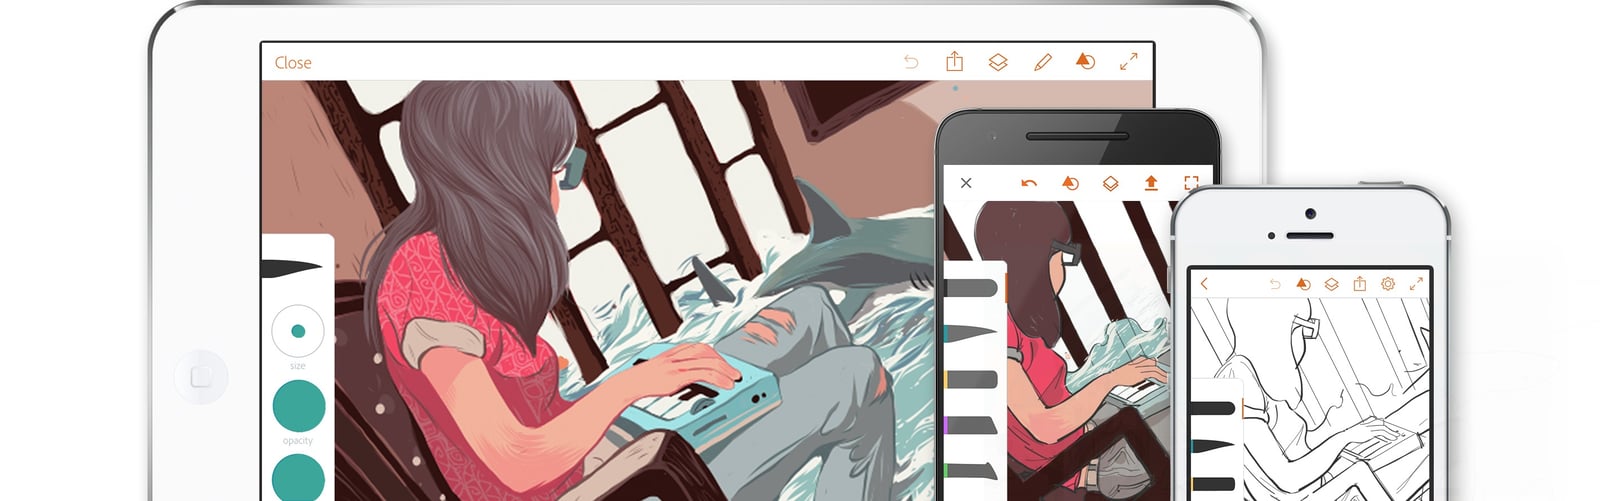 Draw4two рисовать на экране друга. Приложение иллюстрация. Иллюстратор на андроид. Adobe Illustrator для планшета Android. Рисунки на айпаде.